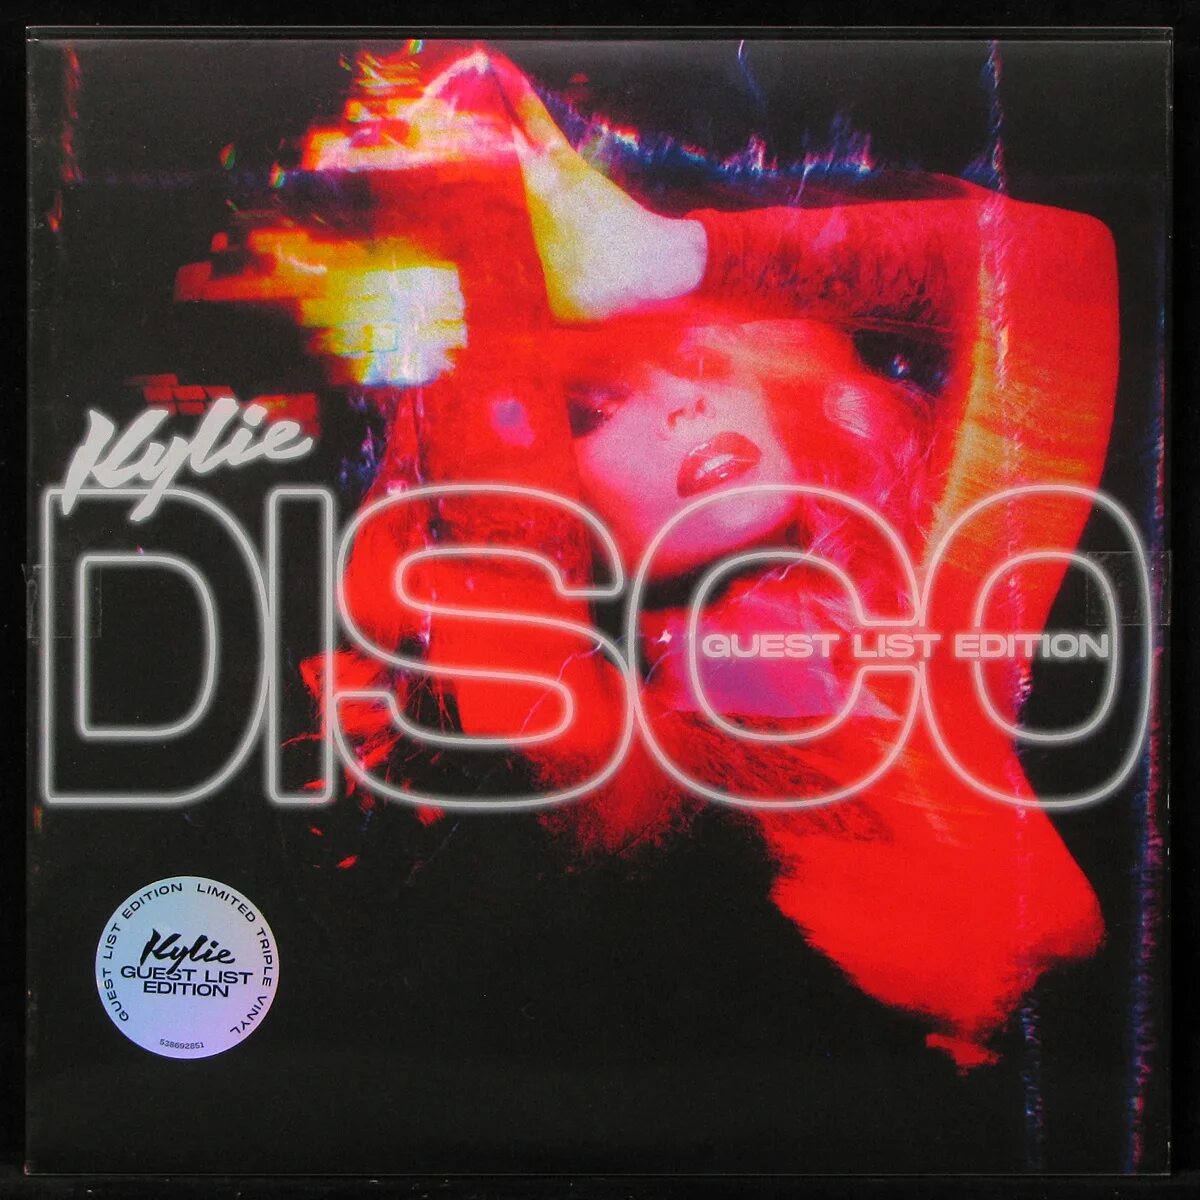 Kylie disco. Kylie Minogue - Disco (Guest list Edition) 3 LP'S. Kylie - Disco (Guest list Edition) LP 1. Kylie Minogue Step back in time LP.